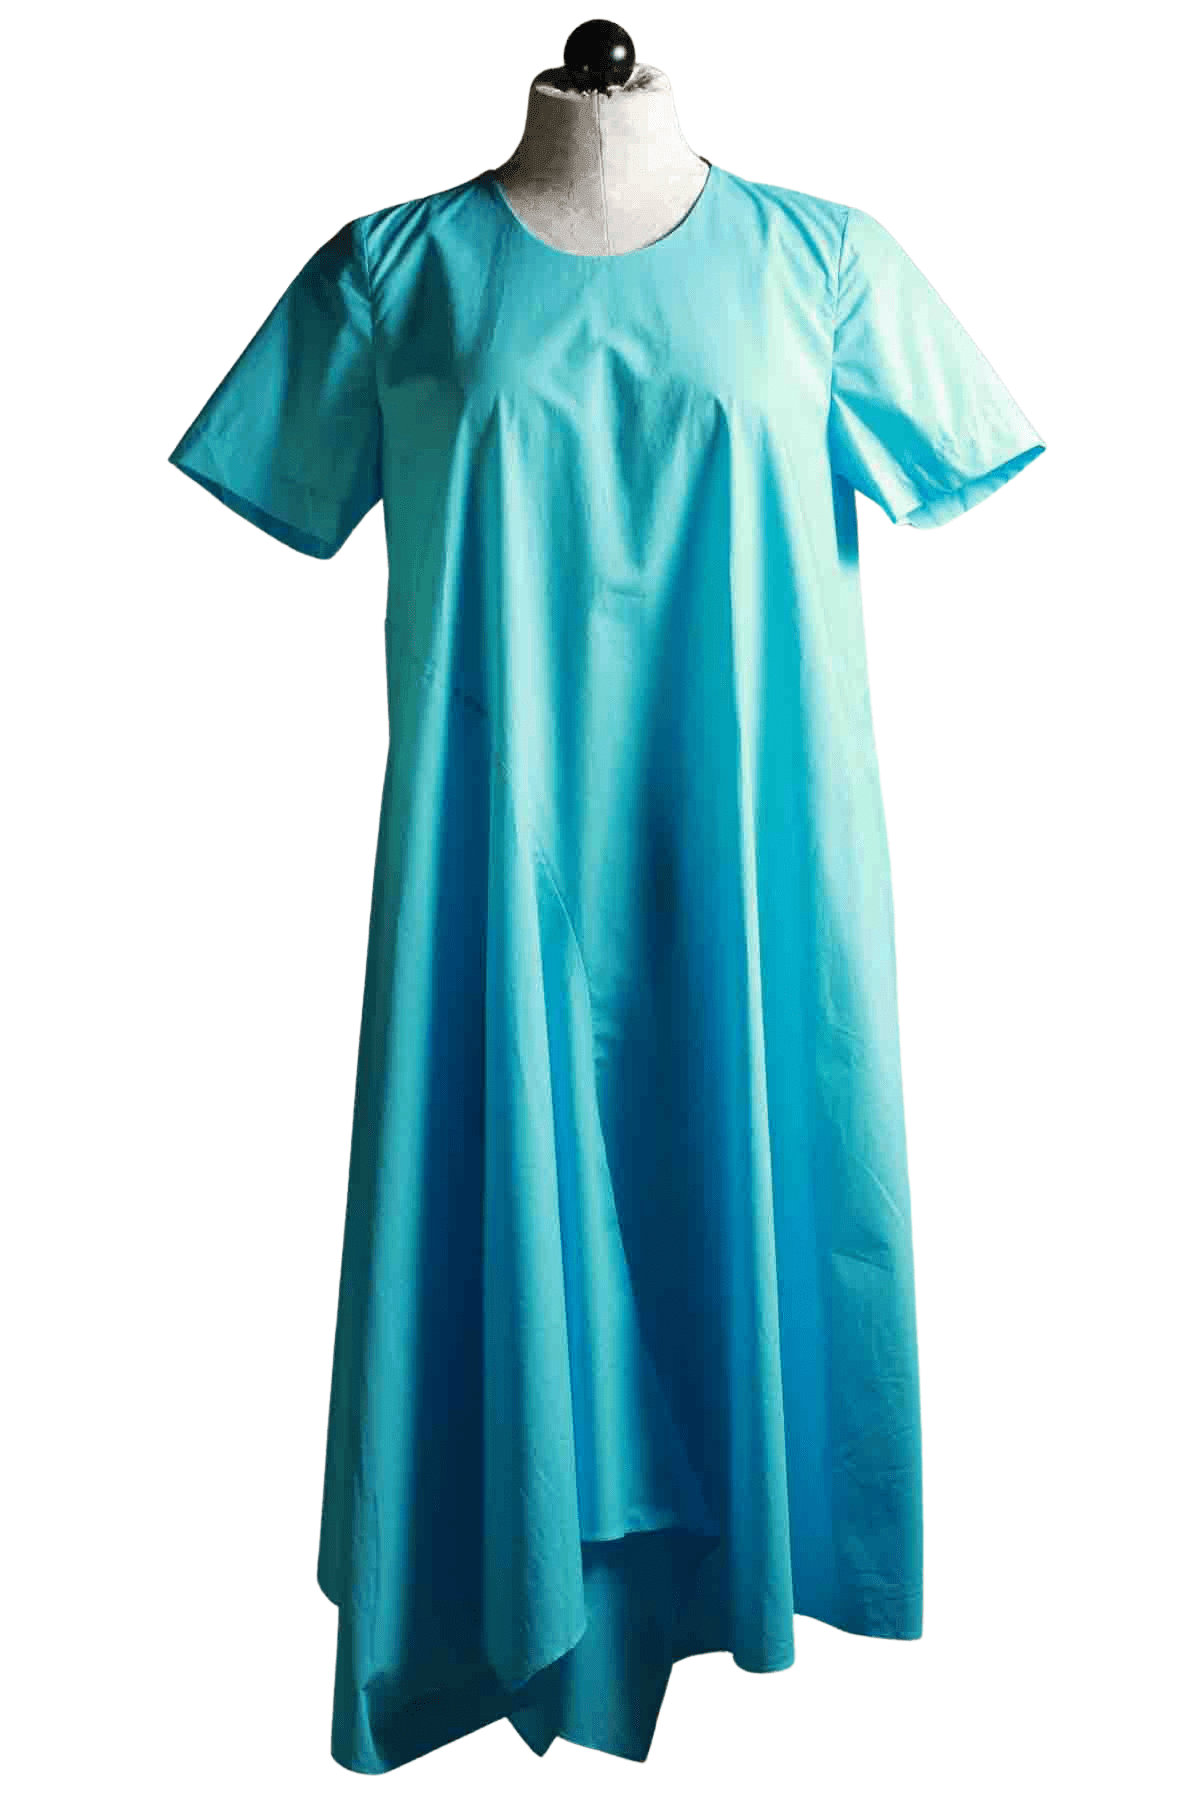 Cyan blue Short Sleeve Cotton Asymmetrical Hem Dress by JNBY